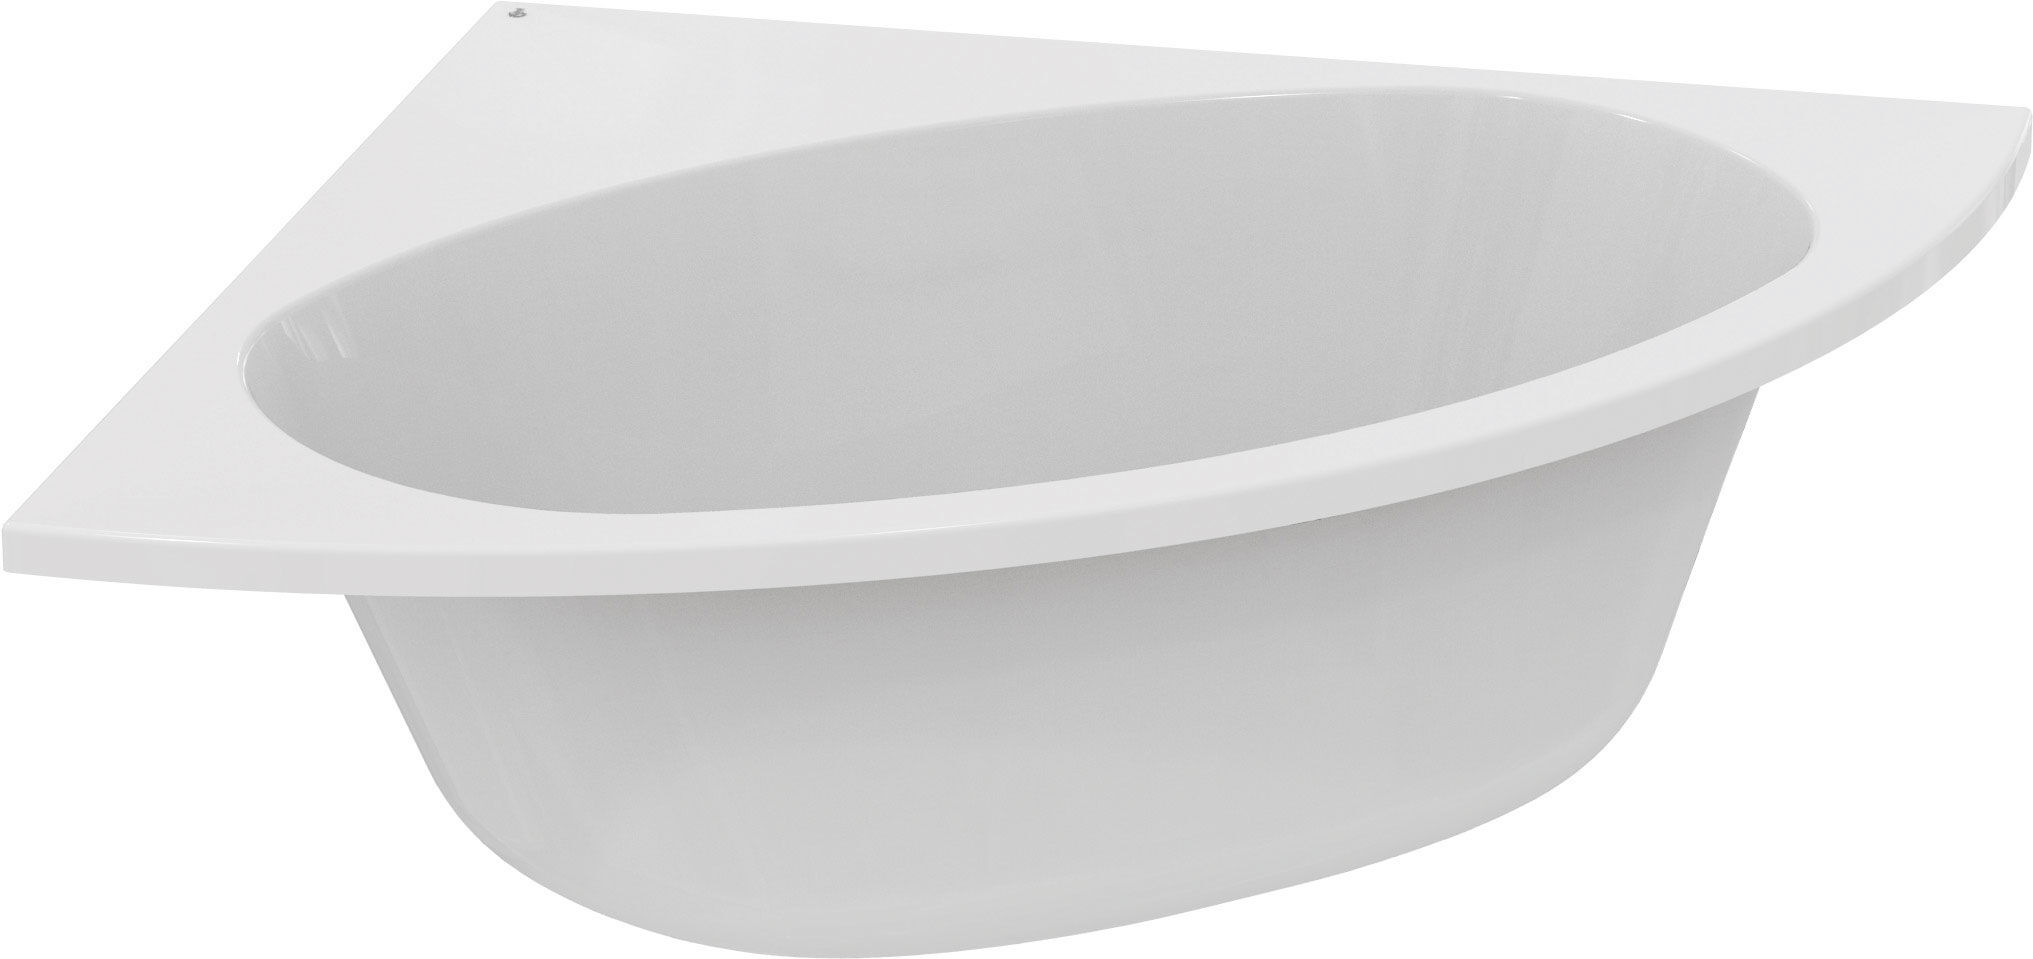 Ideal Standard Badewanne Hotline Neu K275201 150 x 150 cm, weiß